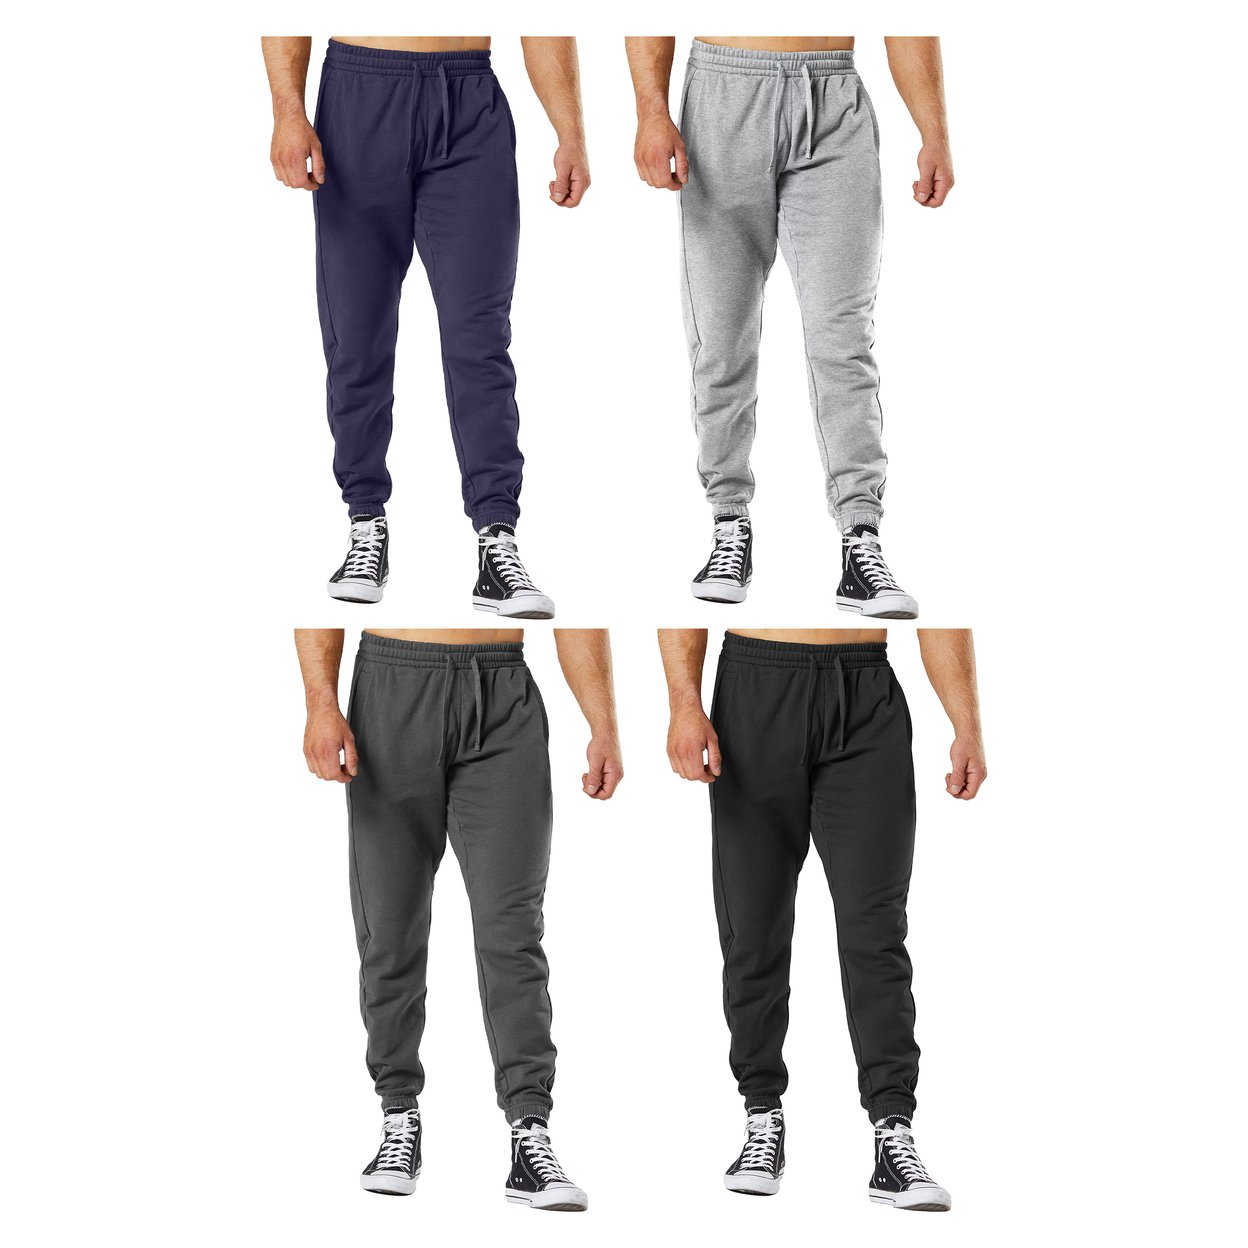 2-Pack: Men's Ultra-Soft Cozy Winter Warm Casual Fleece-Lined Sweatpants Jogger - Black & Charcoal, Medium